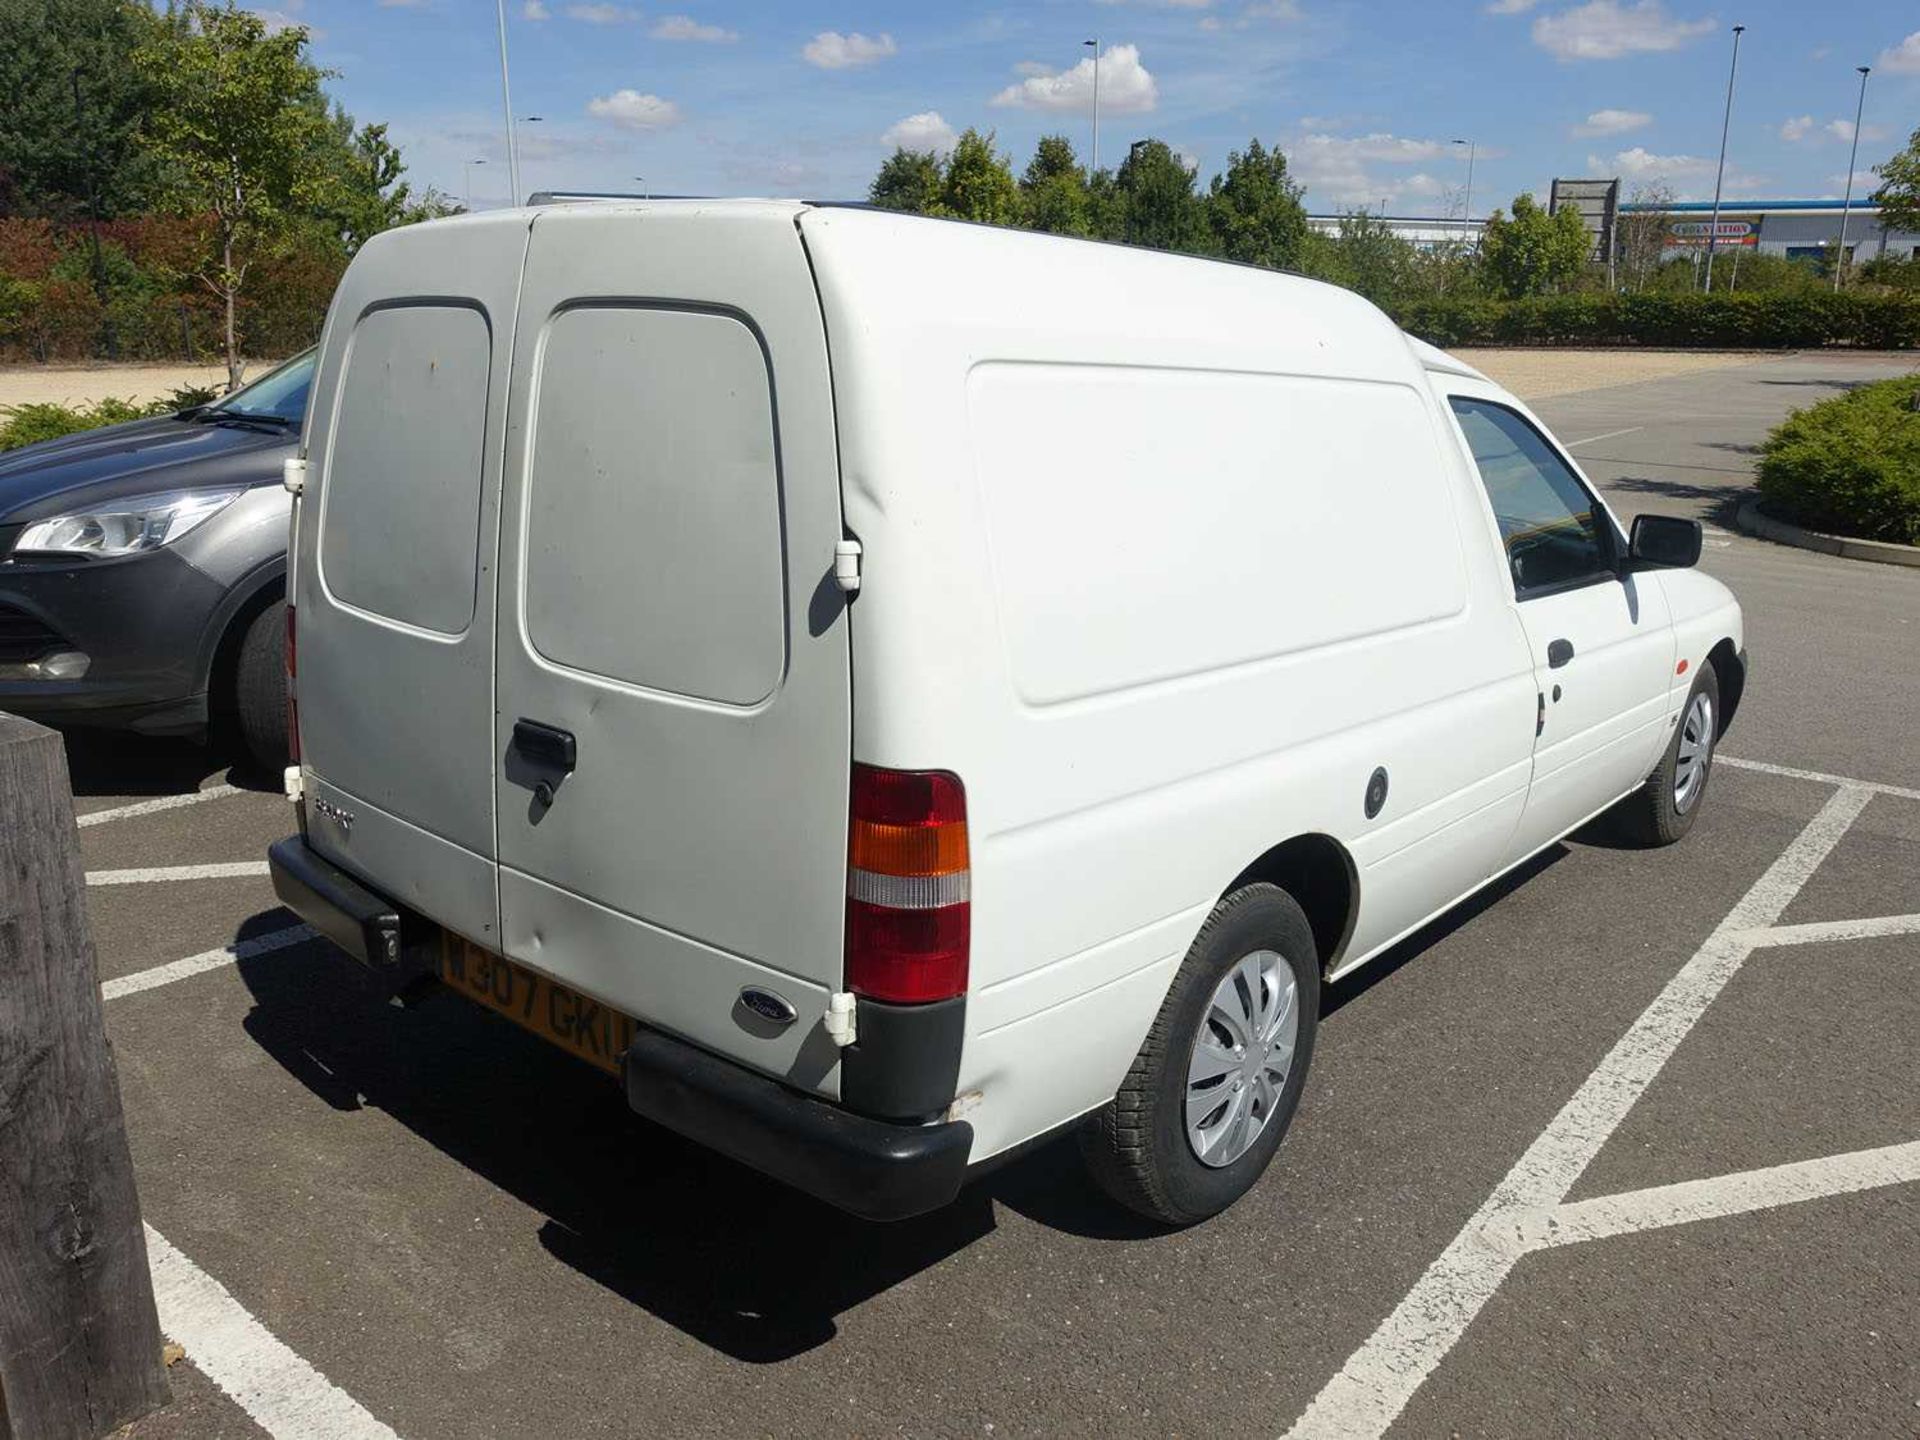 (2000) Escort 55 D Van in white, registration plate W307 GKU, 1753cc, diesel, first registered 17. - Image 4 of 9